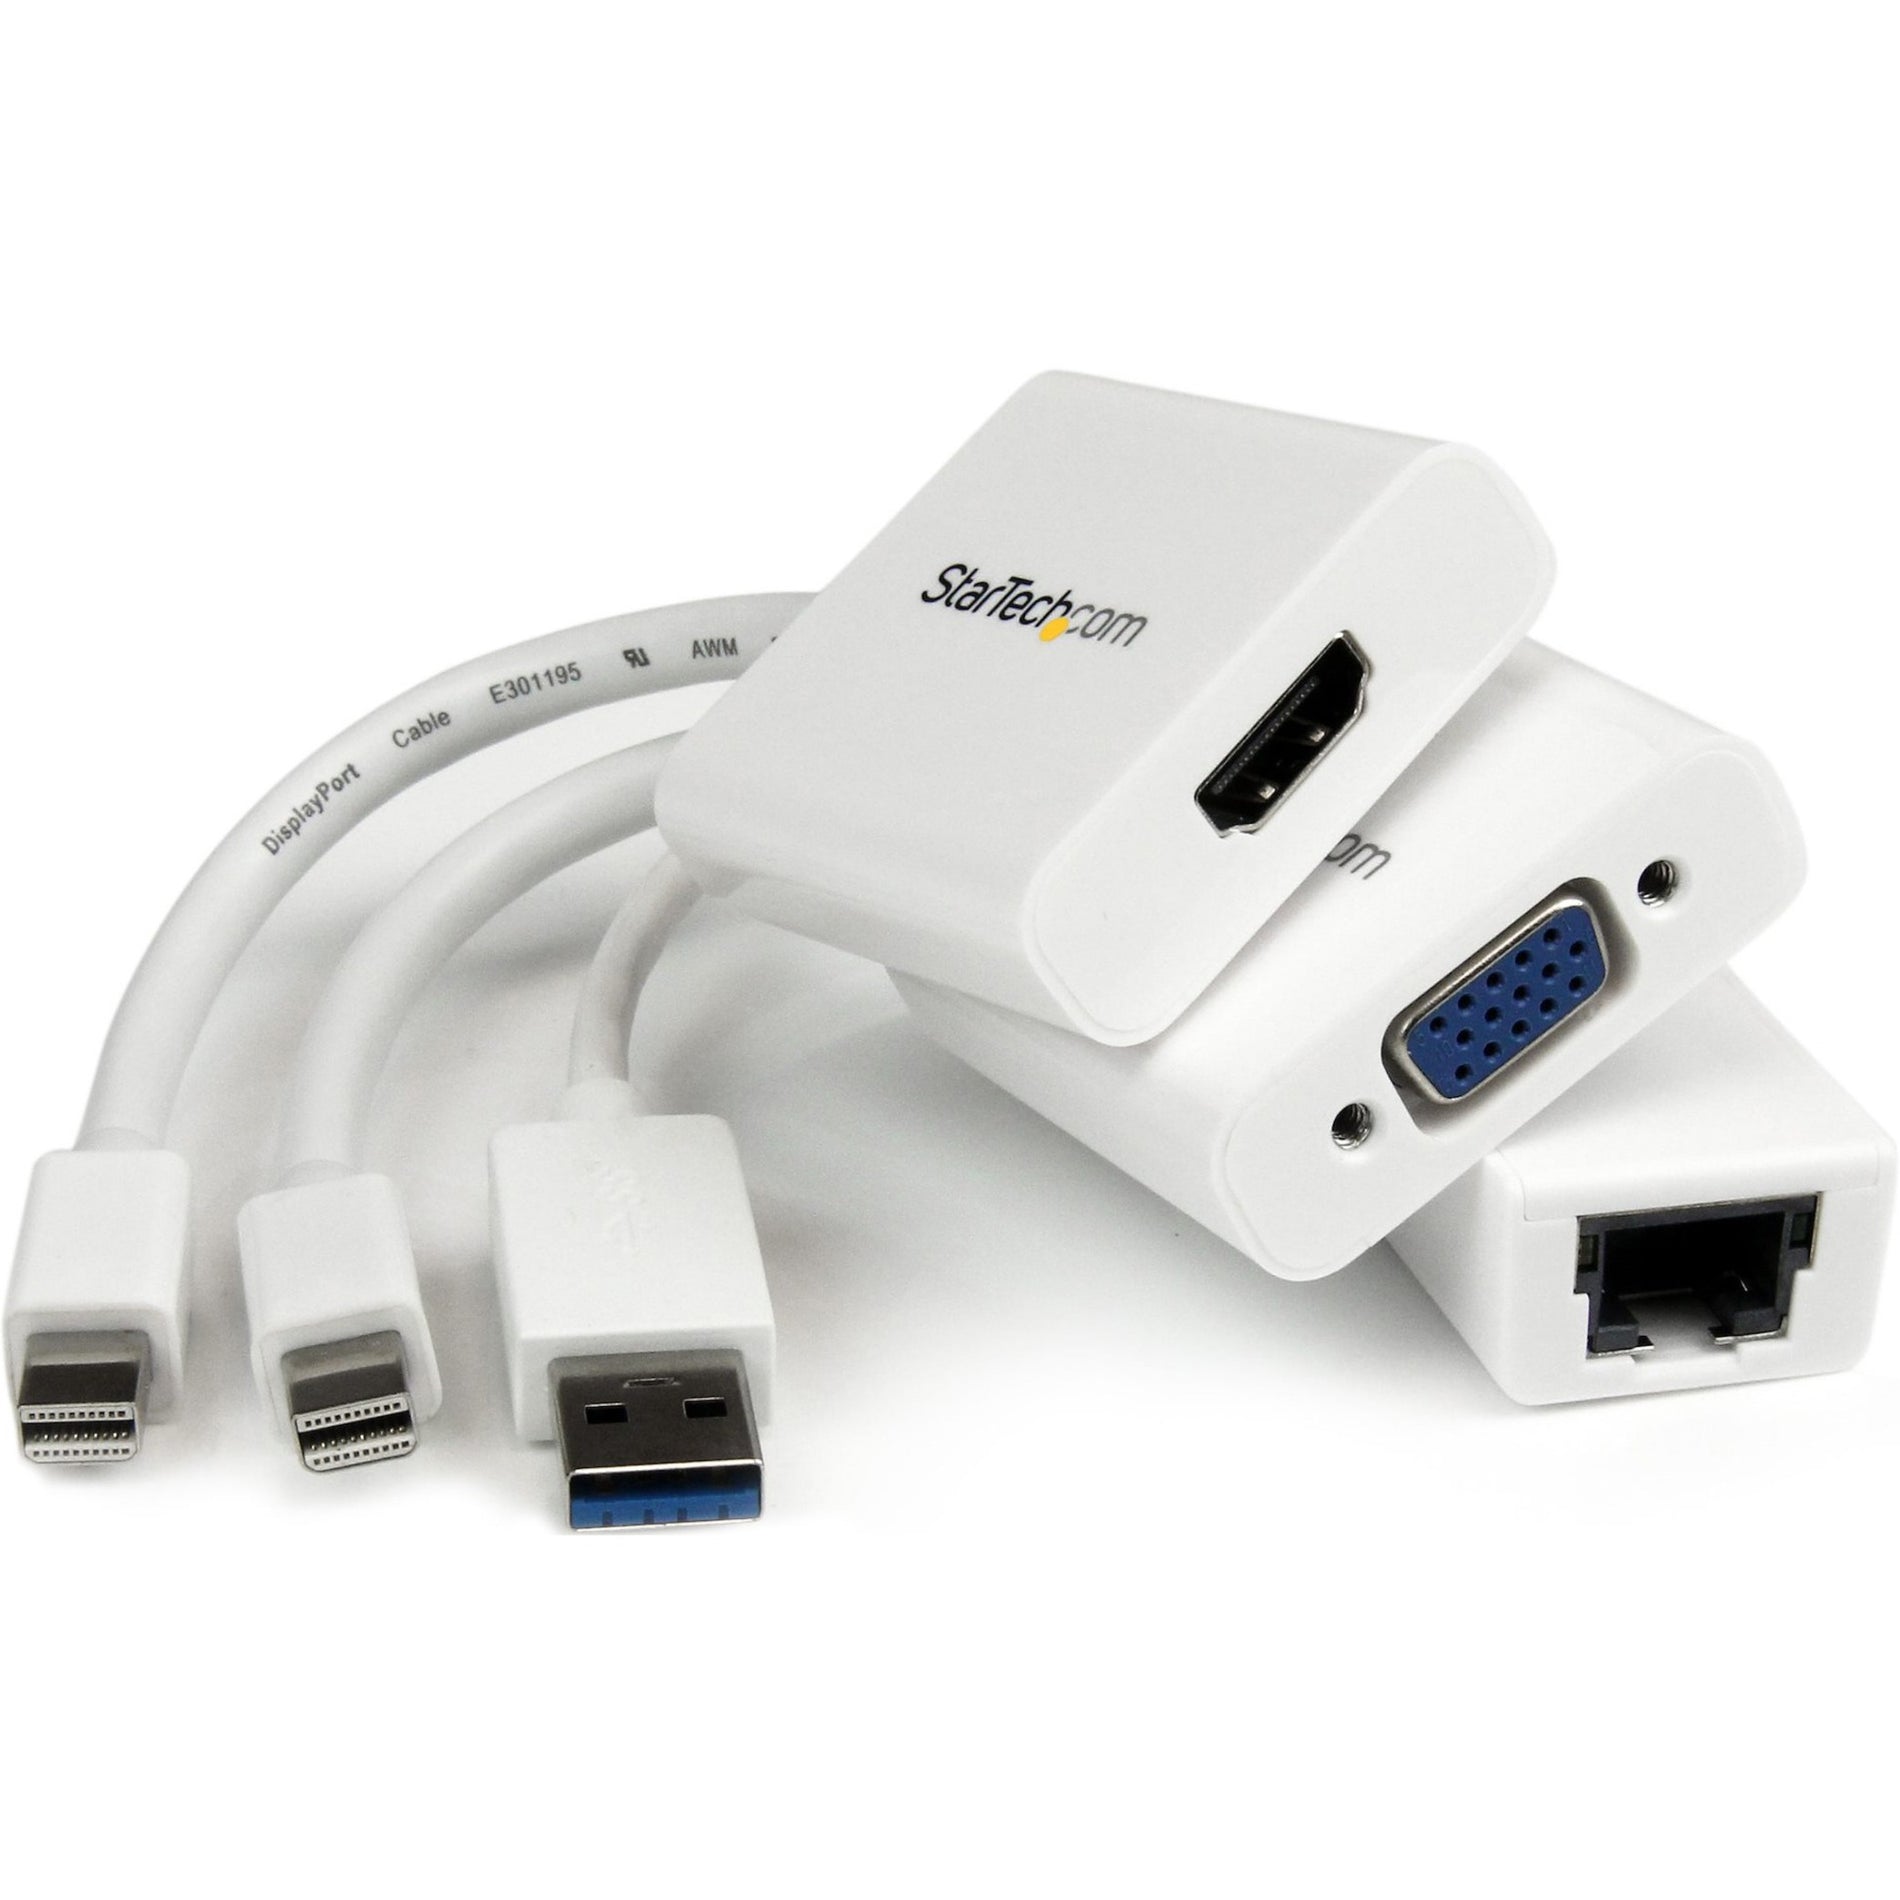 StarTech.com MacBook Air Display/Ethernet Adapter Kit [Discontinued]